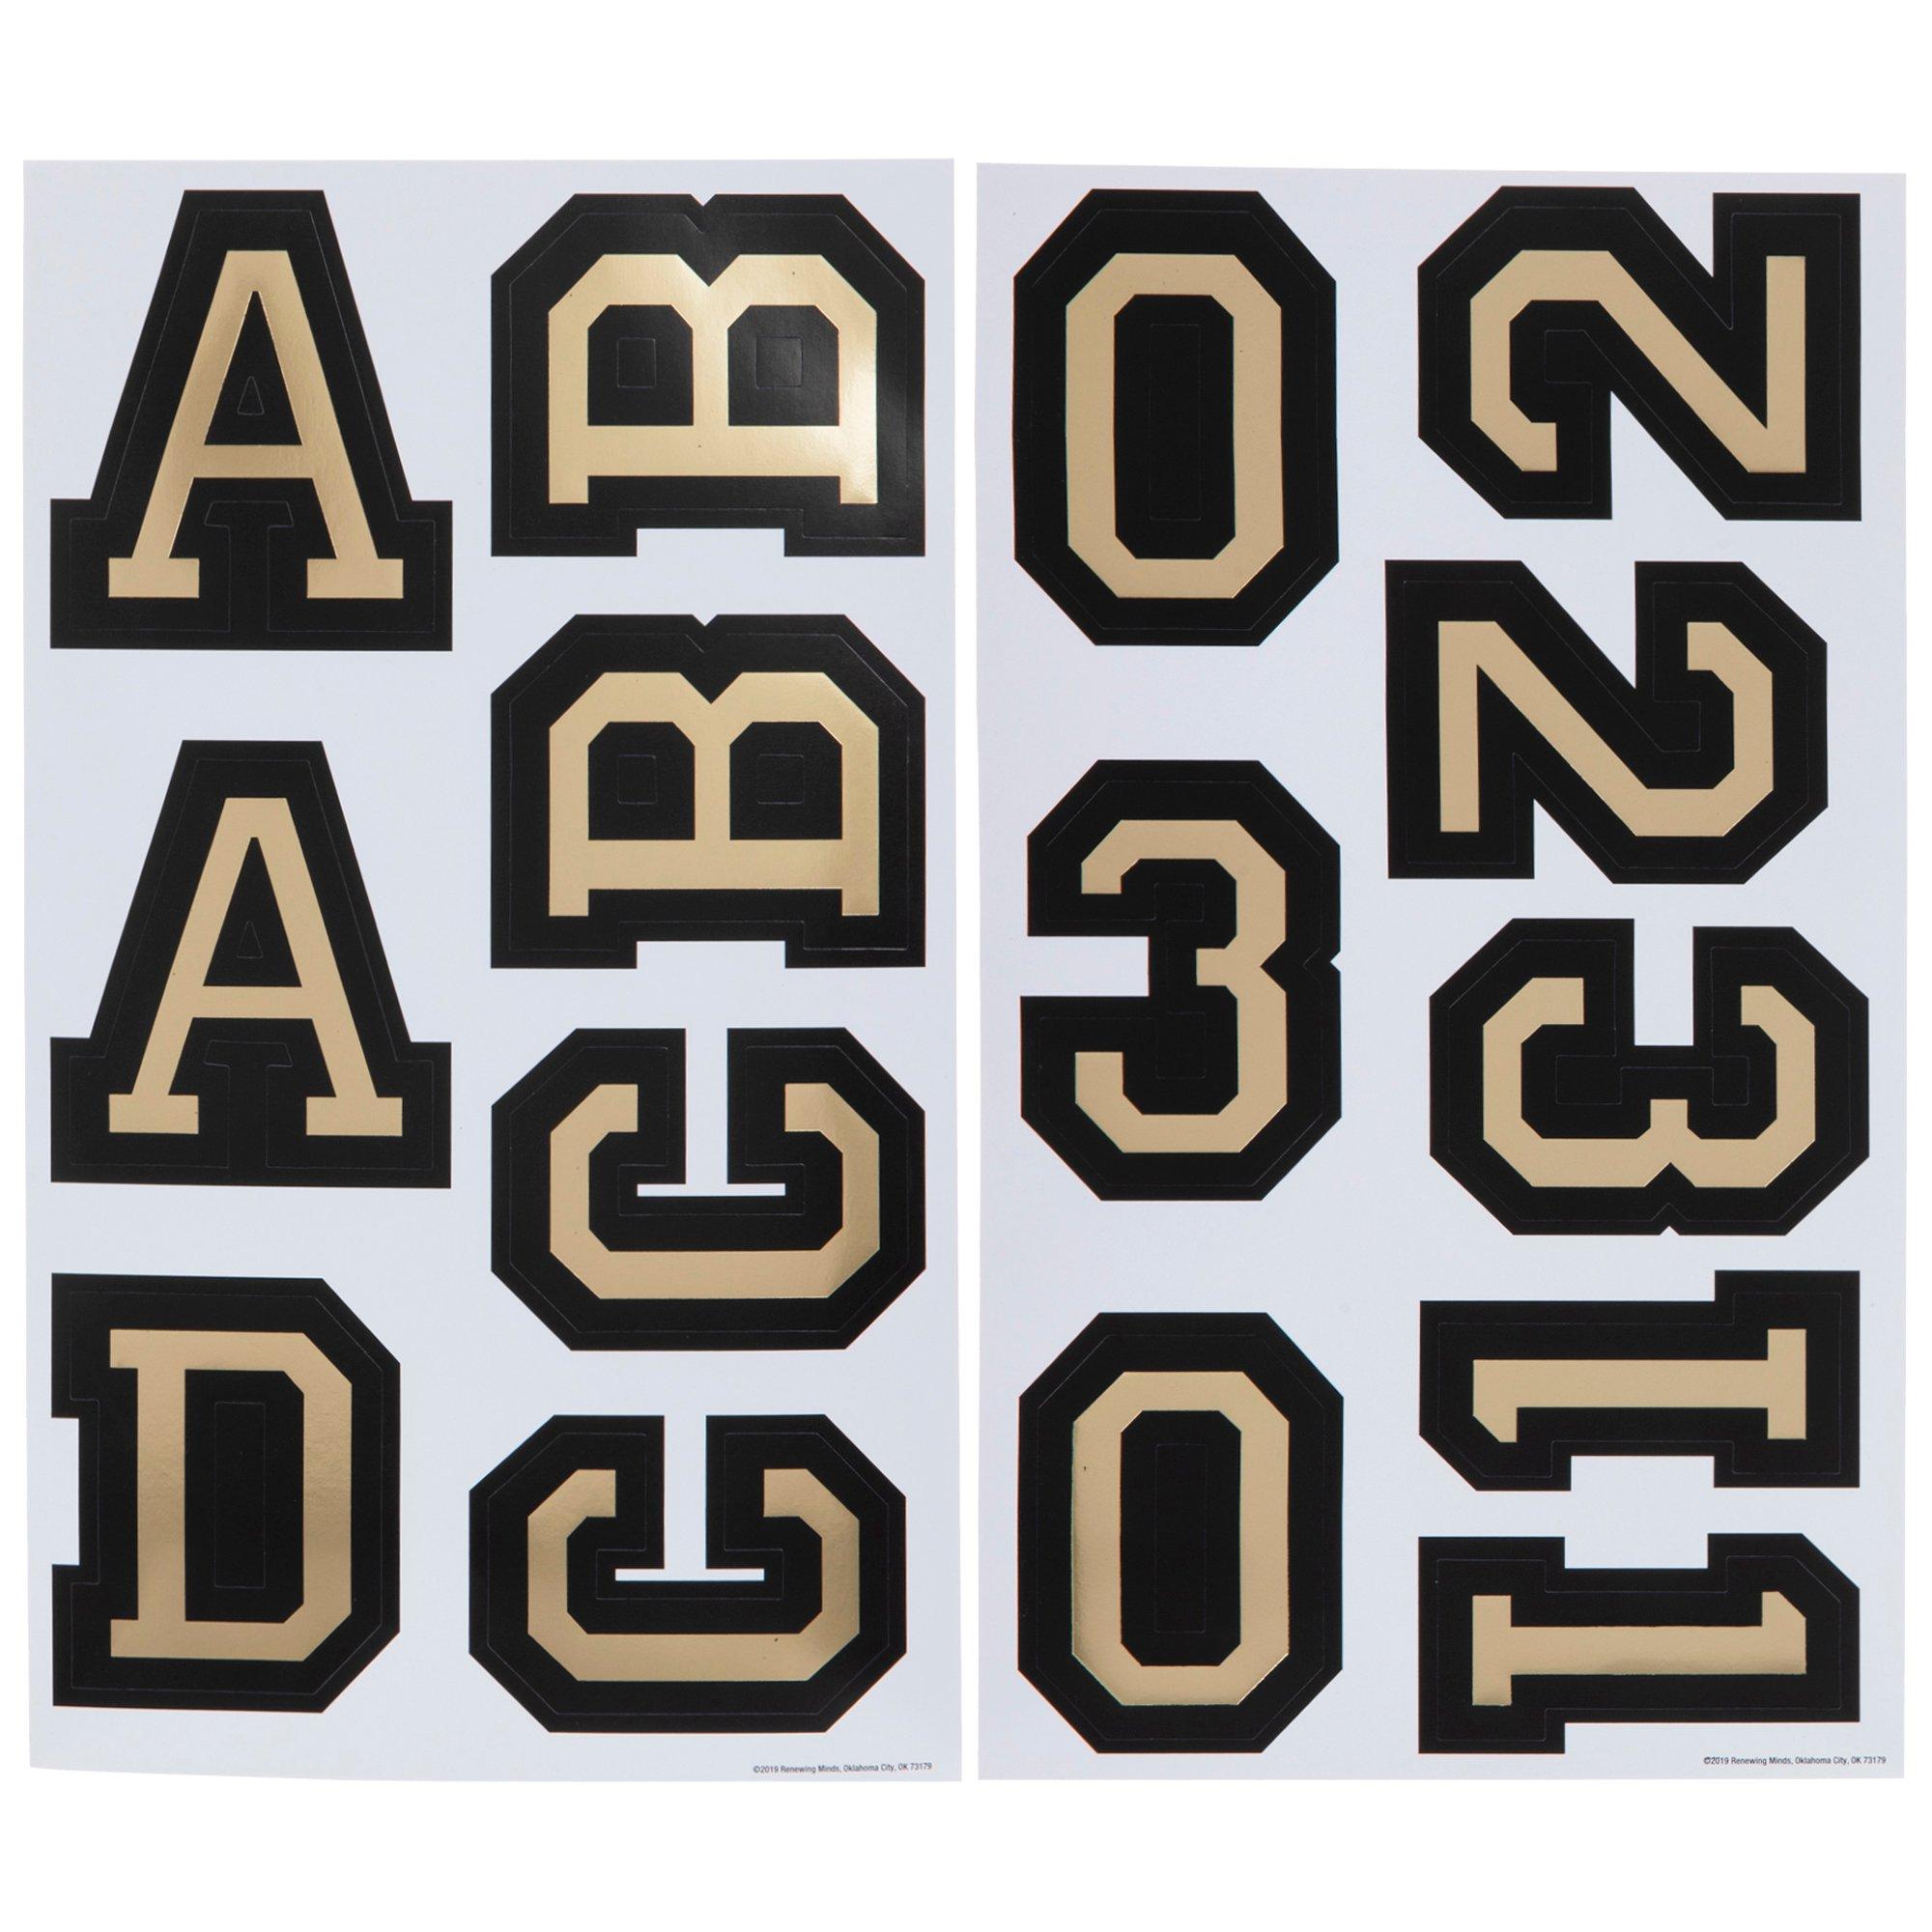 Black Embossed Alphabet Stickers, Hobby Lobby